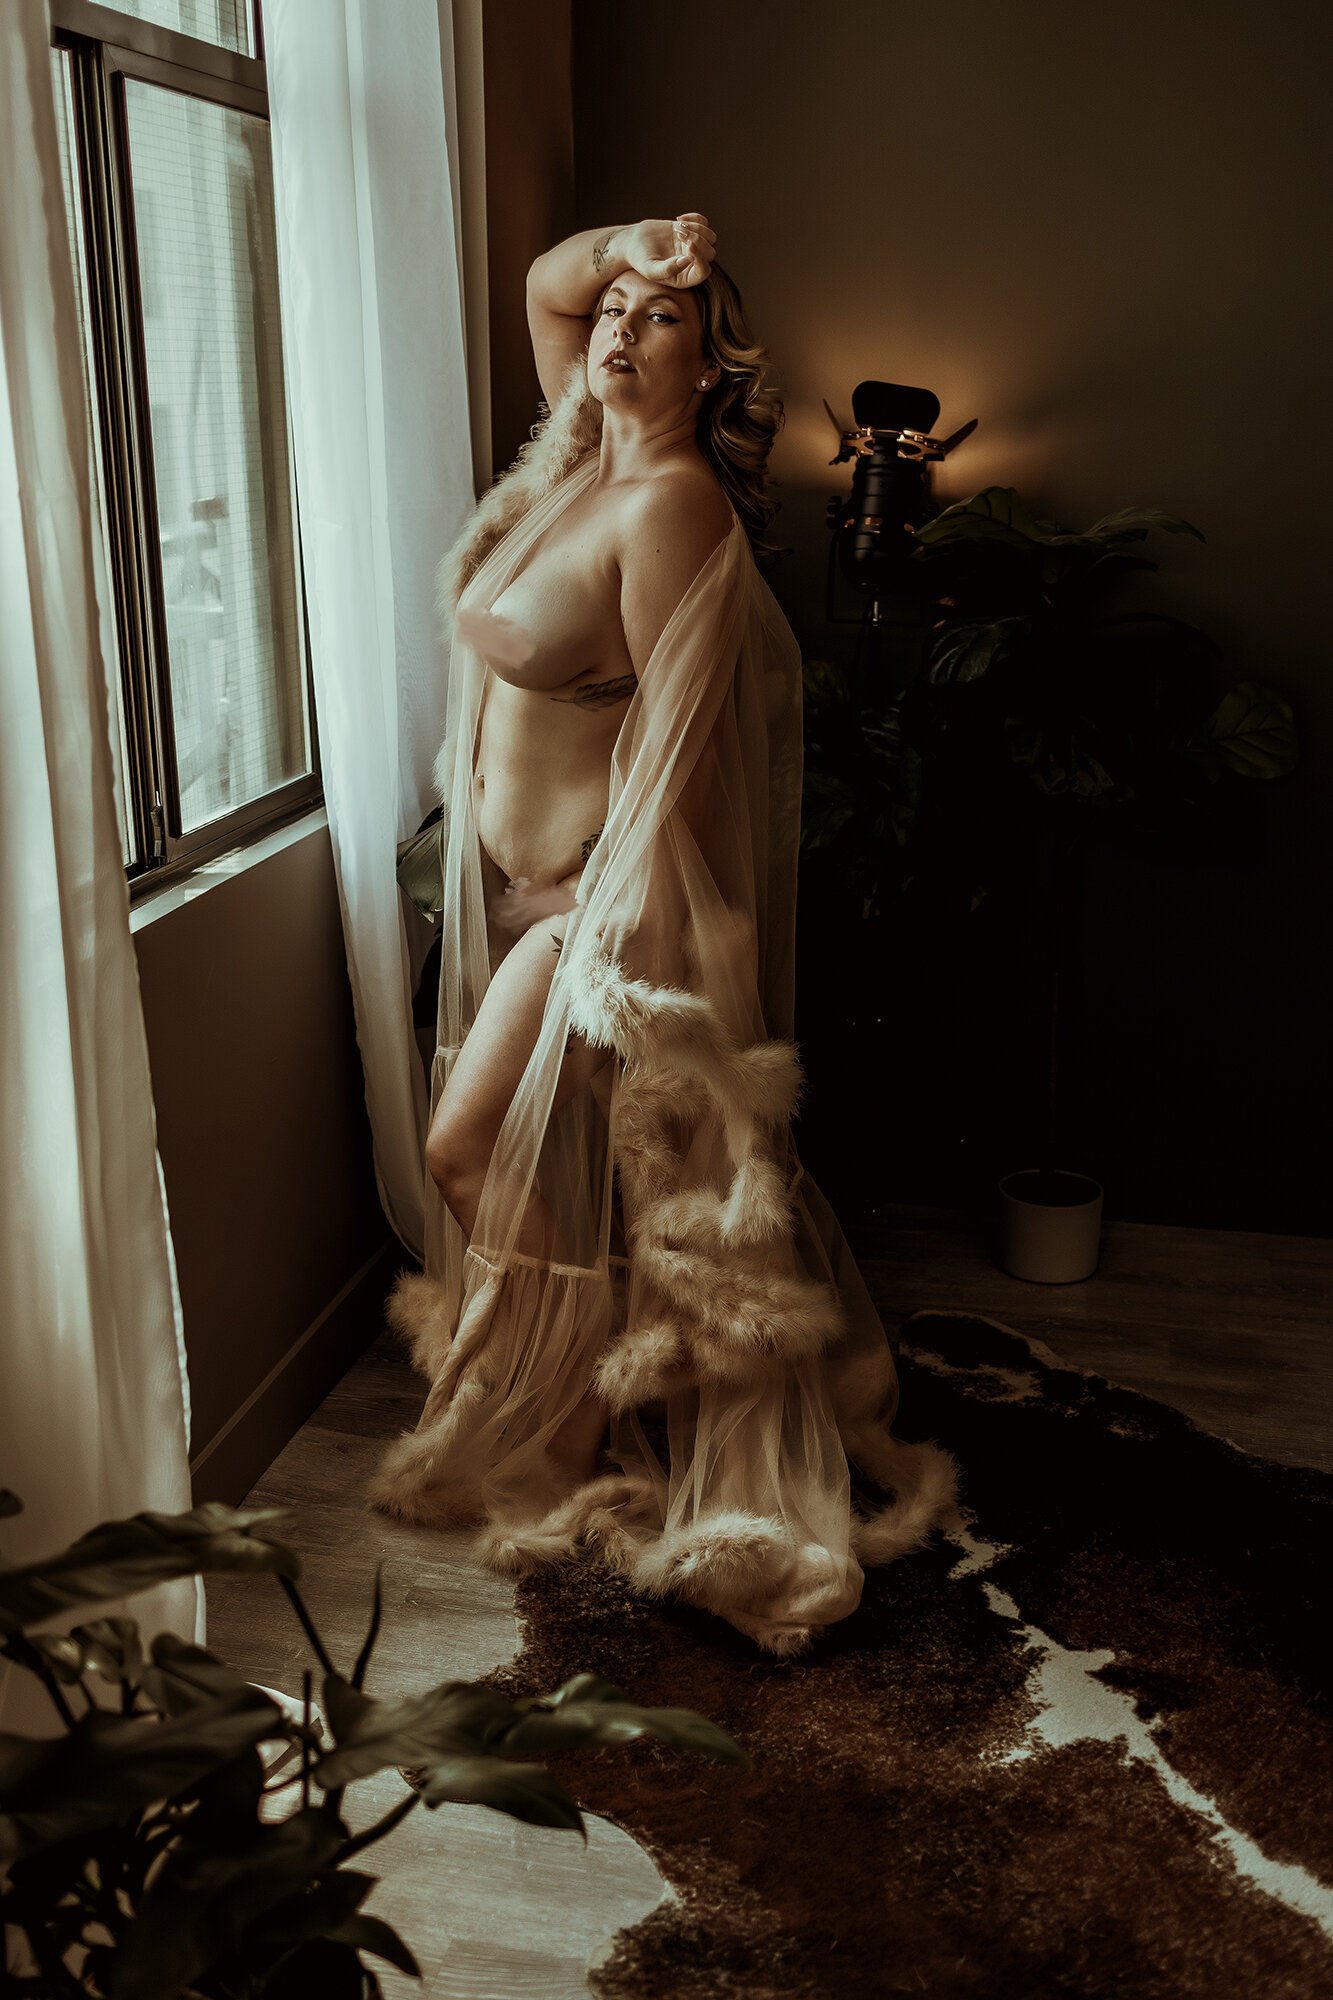 victoria bc boudoir photography-19 censoredcopy.jpg